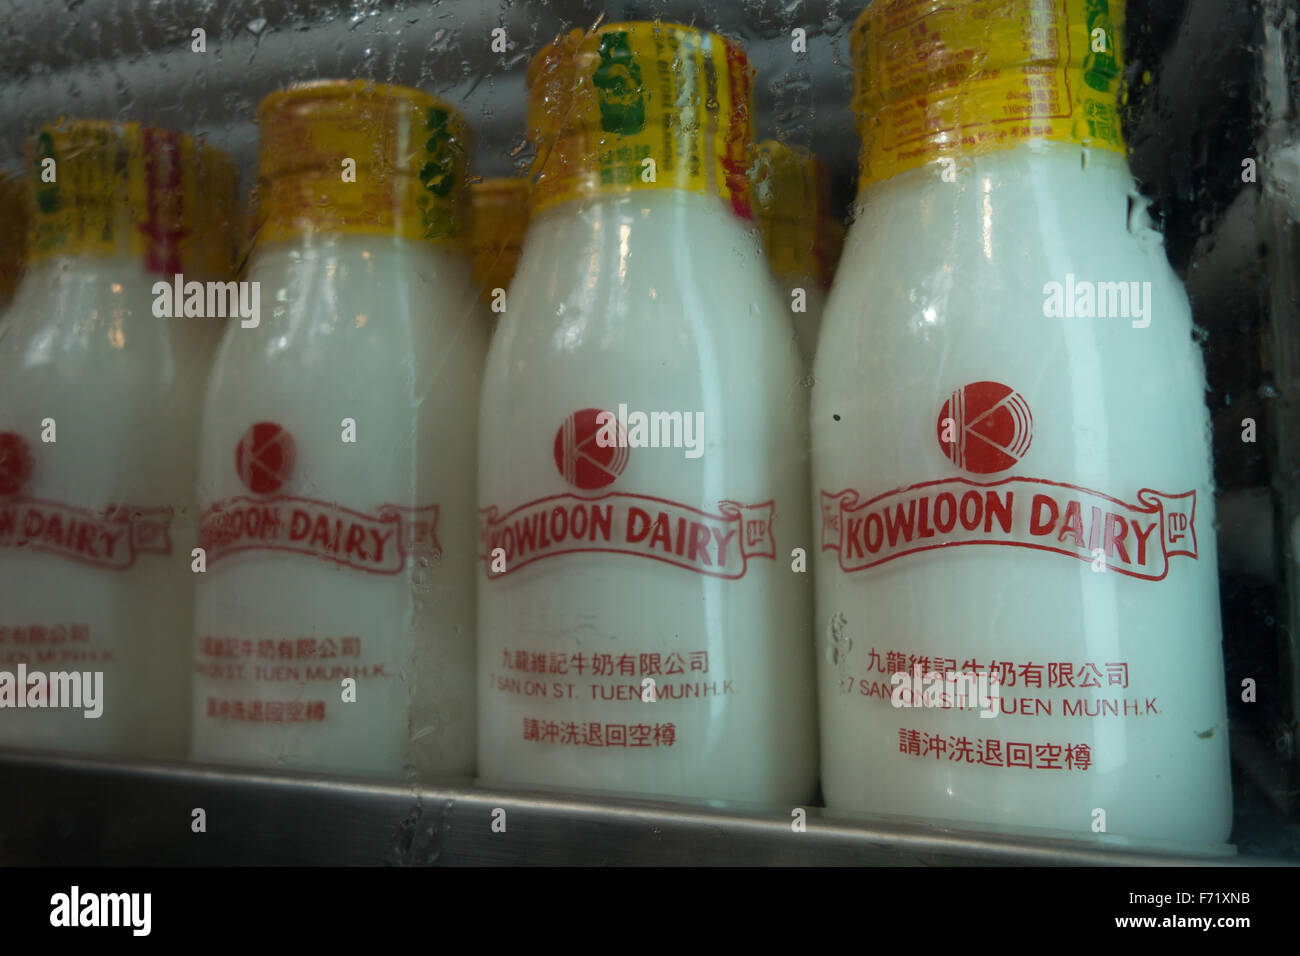 kowloon dairy milk glass bottles Stock Photo